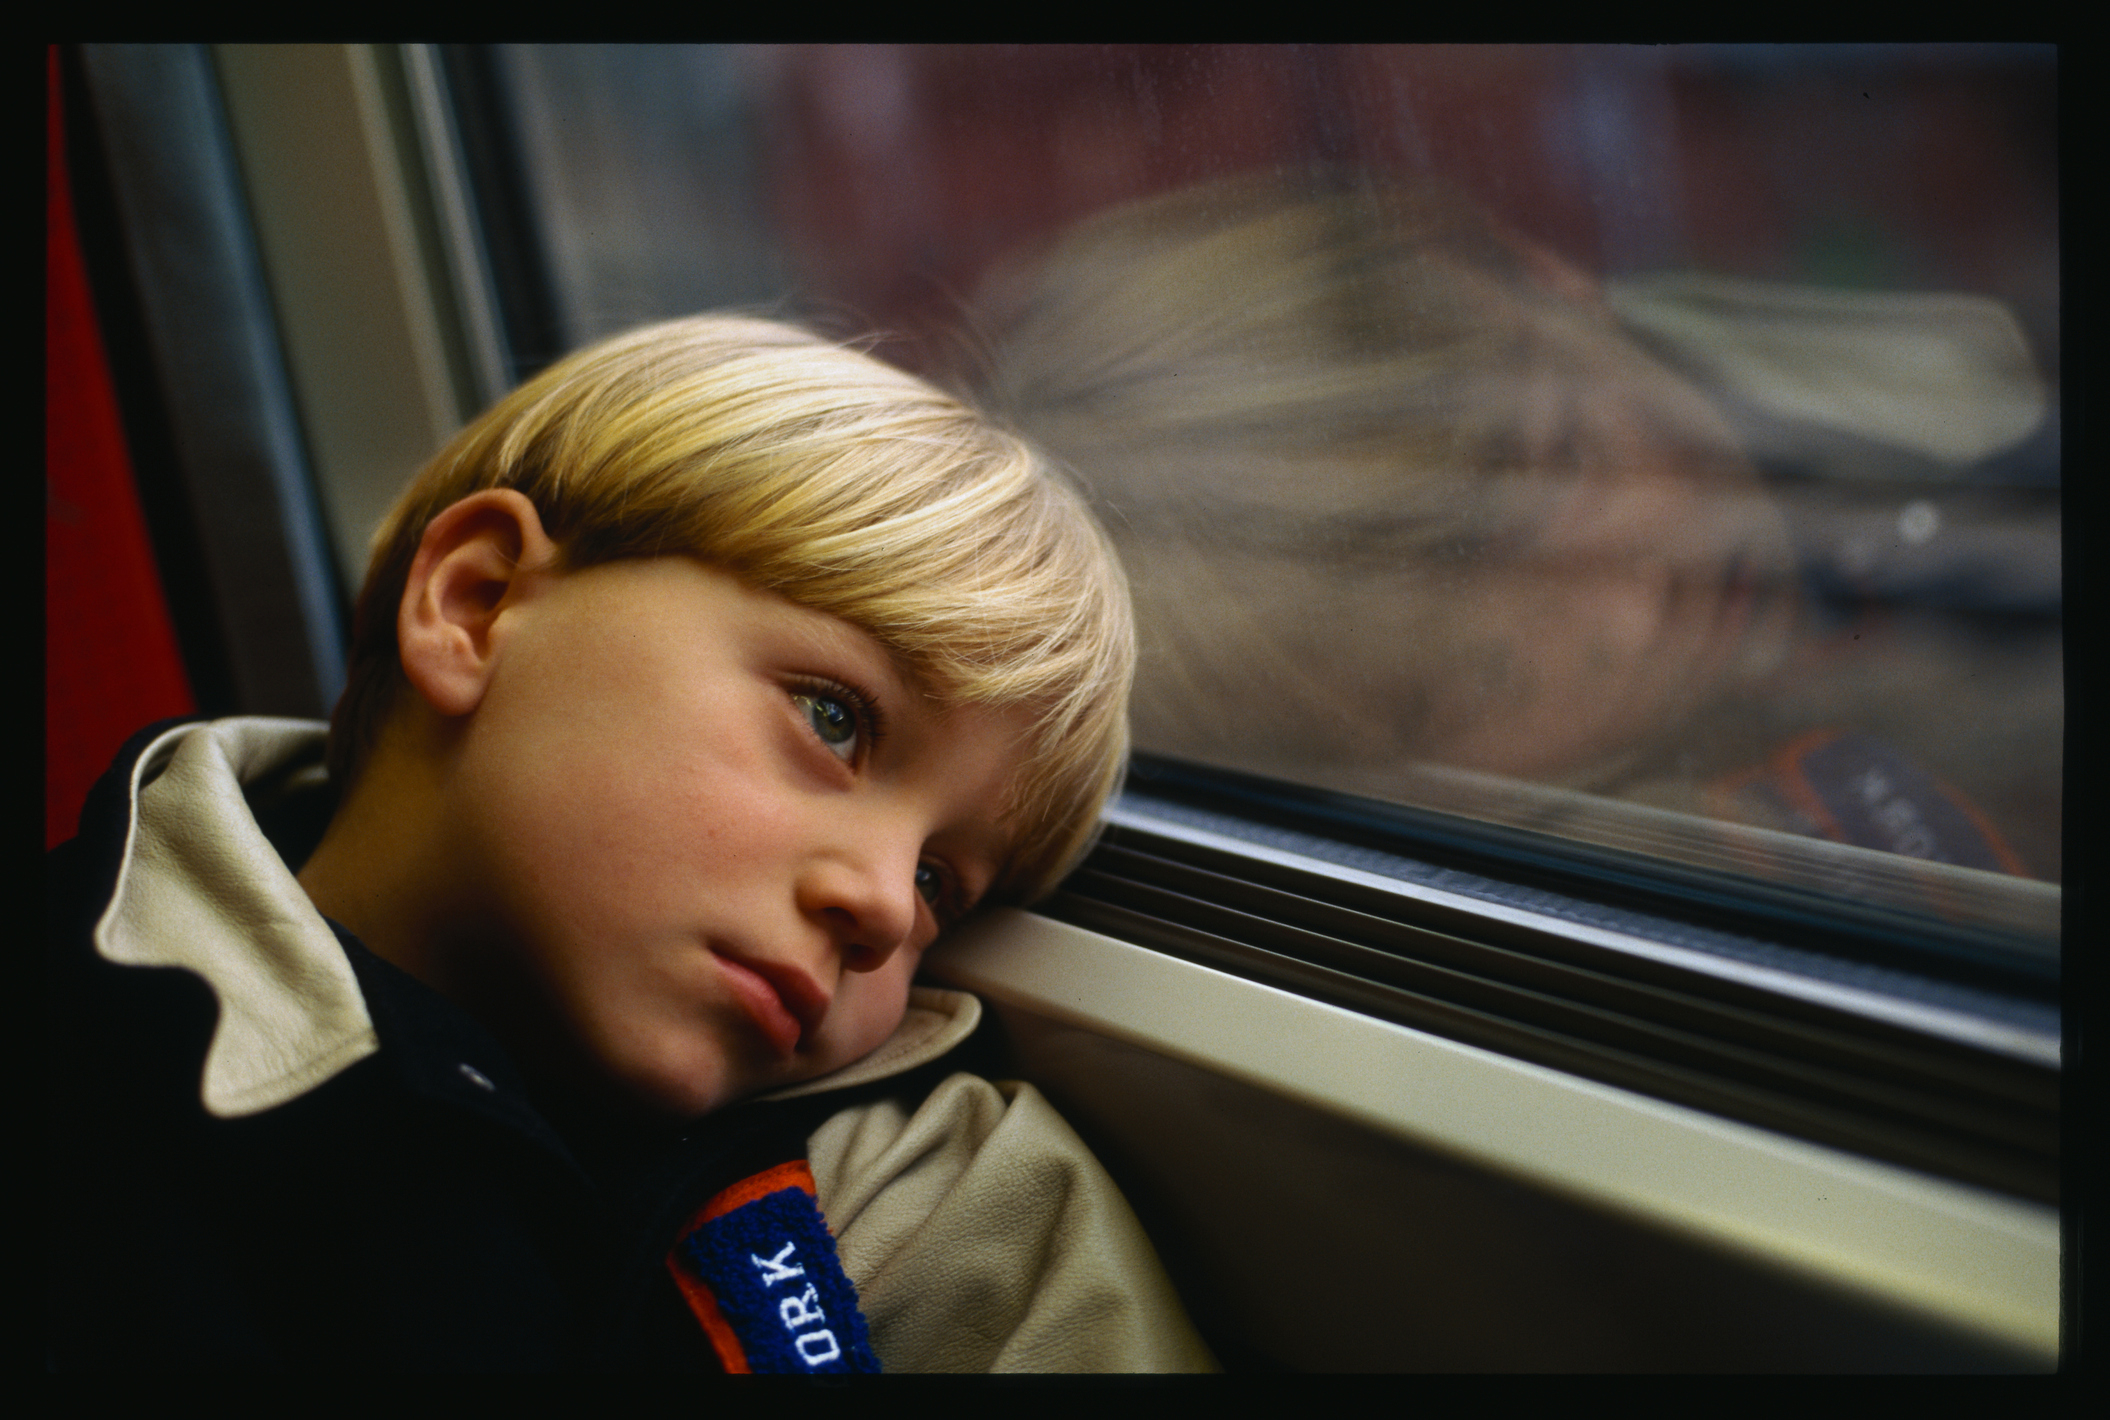 A little boy looking bored on a train